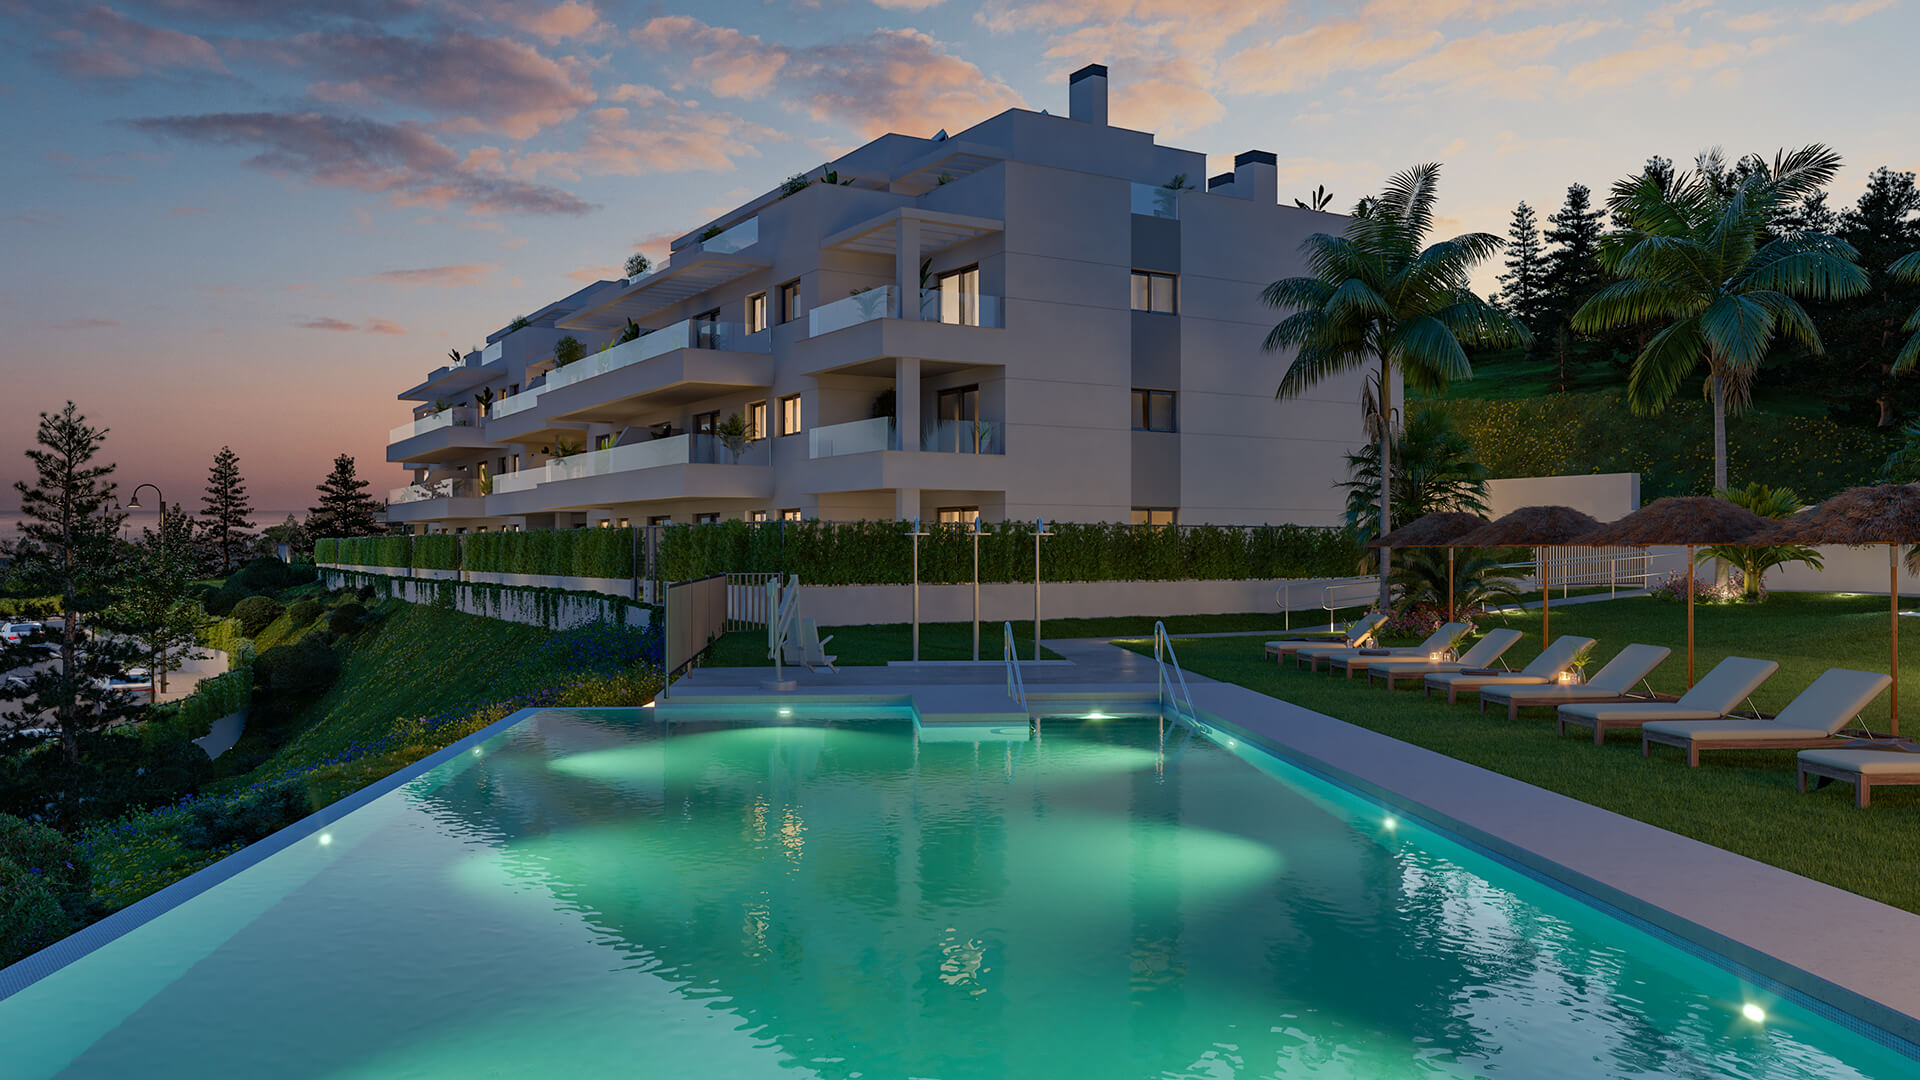 Sunrise Mijas - New Apartments For Sale in Mijas